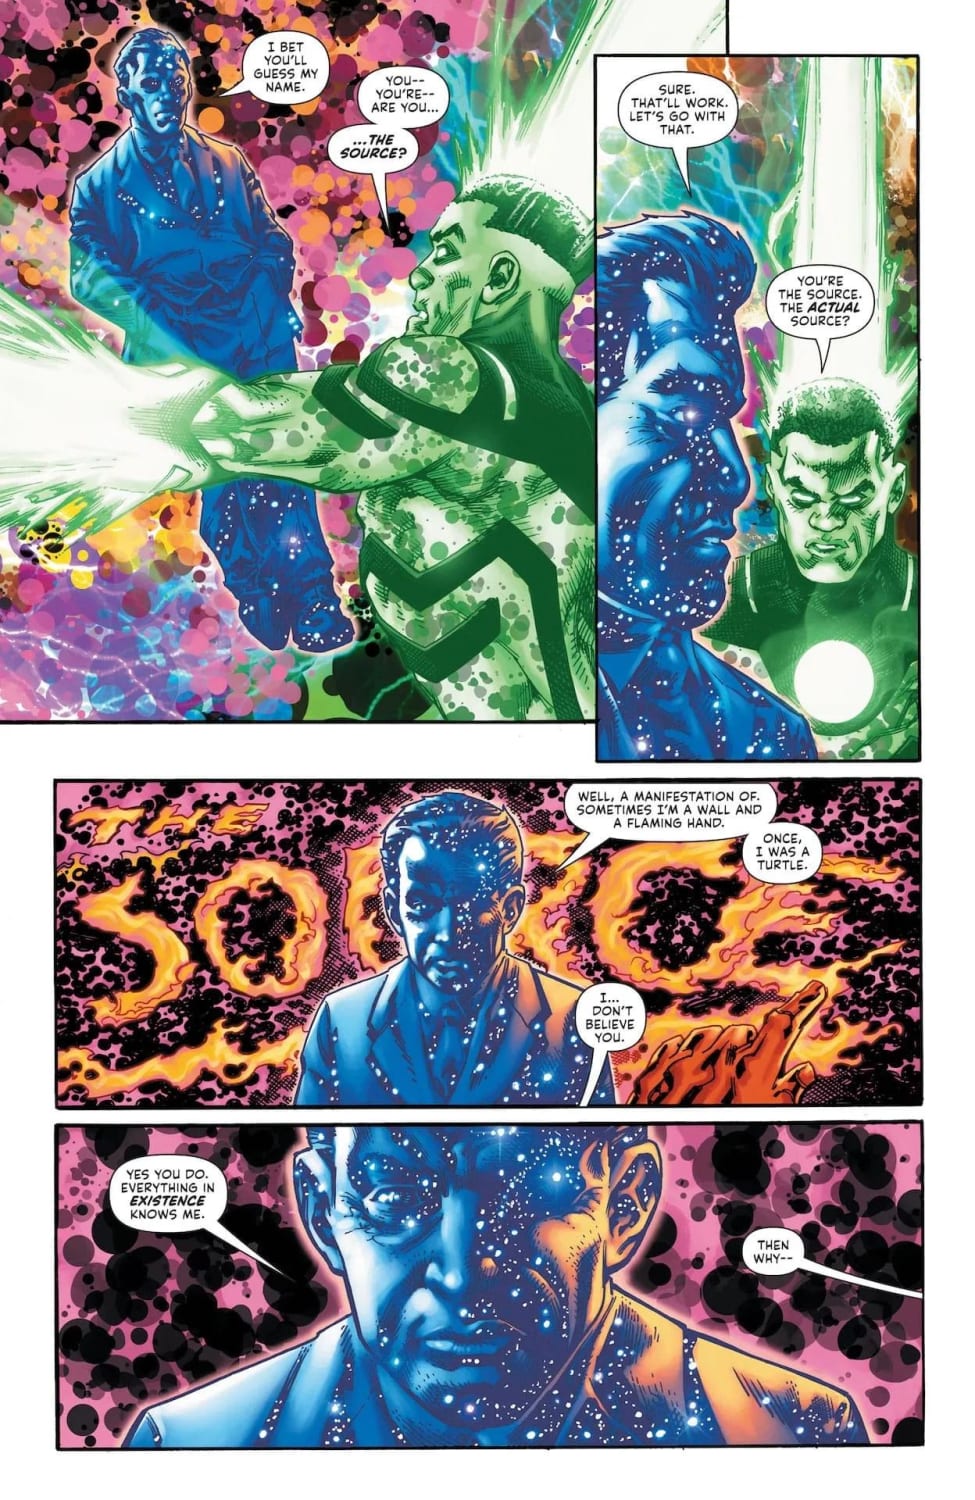 [Comic Excerpt] Beautiful Jack Kirby homage! (Green Lantern #12 by Tom Raney, Marco Santucci)